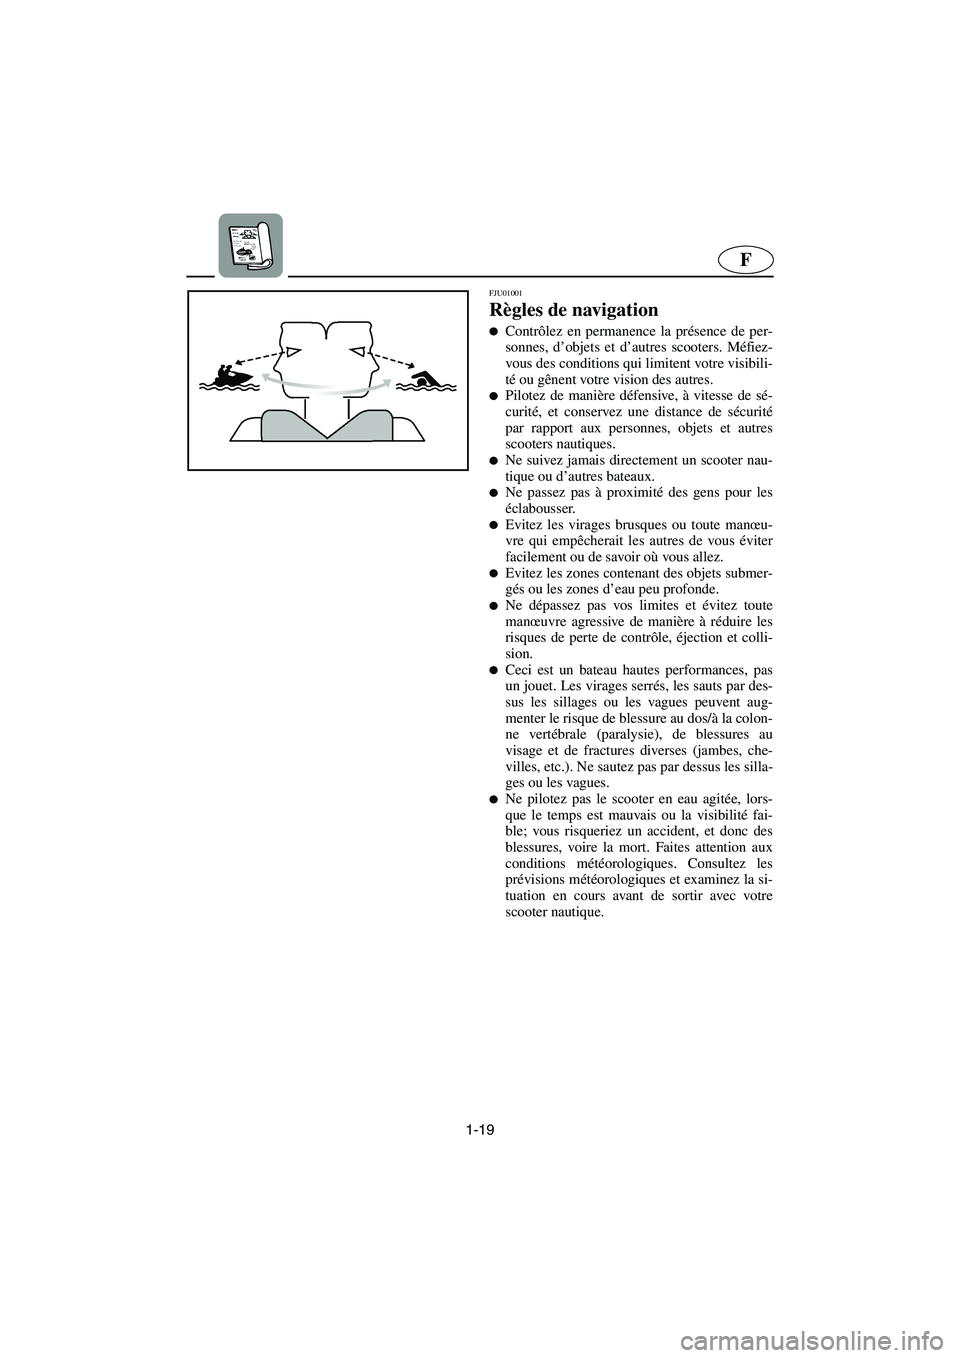 YAMAHA FX 2003  Manuale de Empleo (in Spanish) 1-19
F
FJU01001 
Règles de navigation  
Contrôlez en permanence la présence de per-
sonnes, d’objets et d’autres scooters. Méfiez-
vous des conditions qui limitent votre visibili-
té ou gên